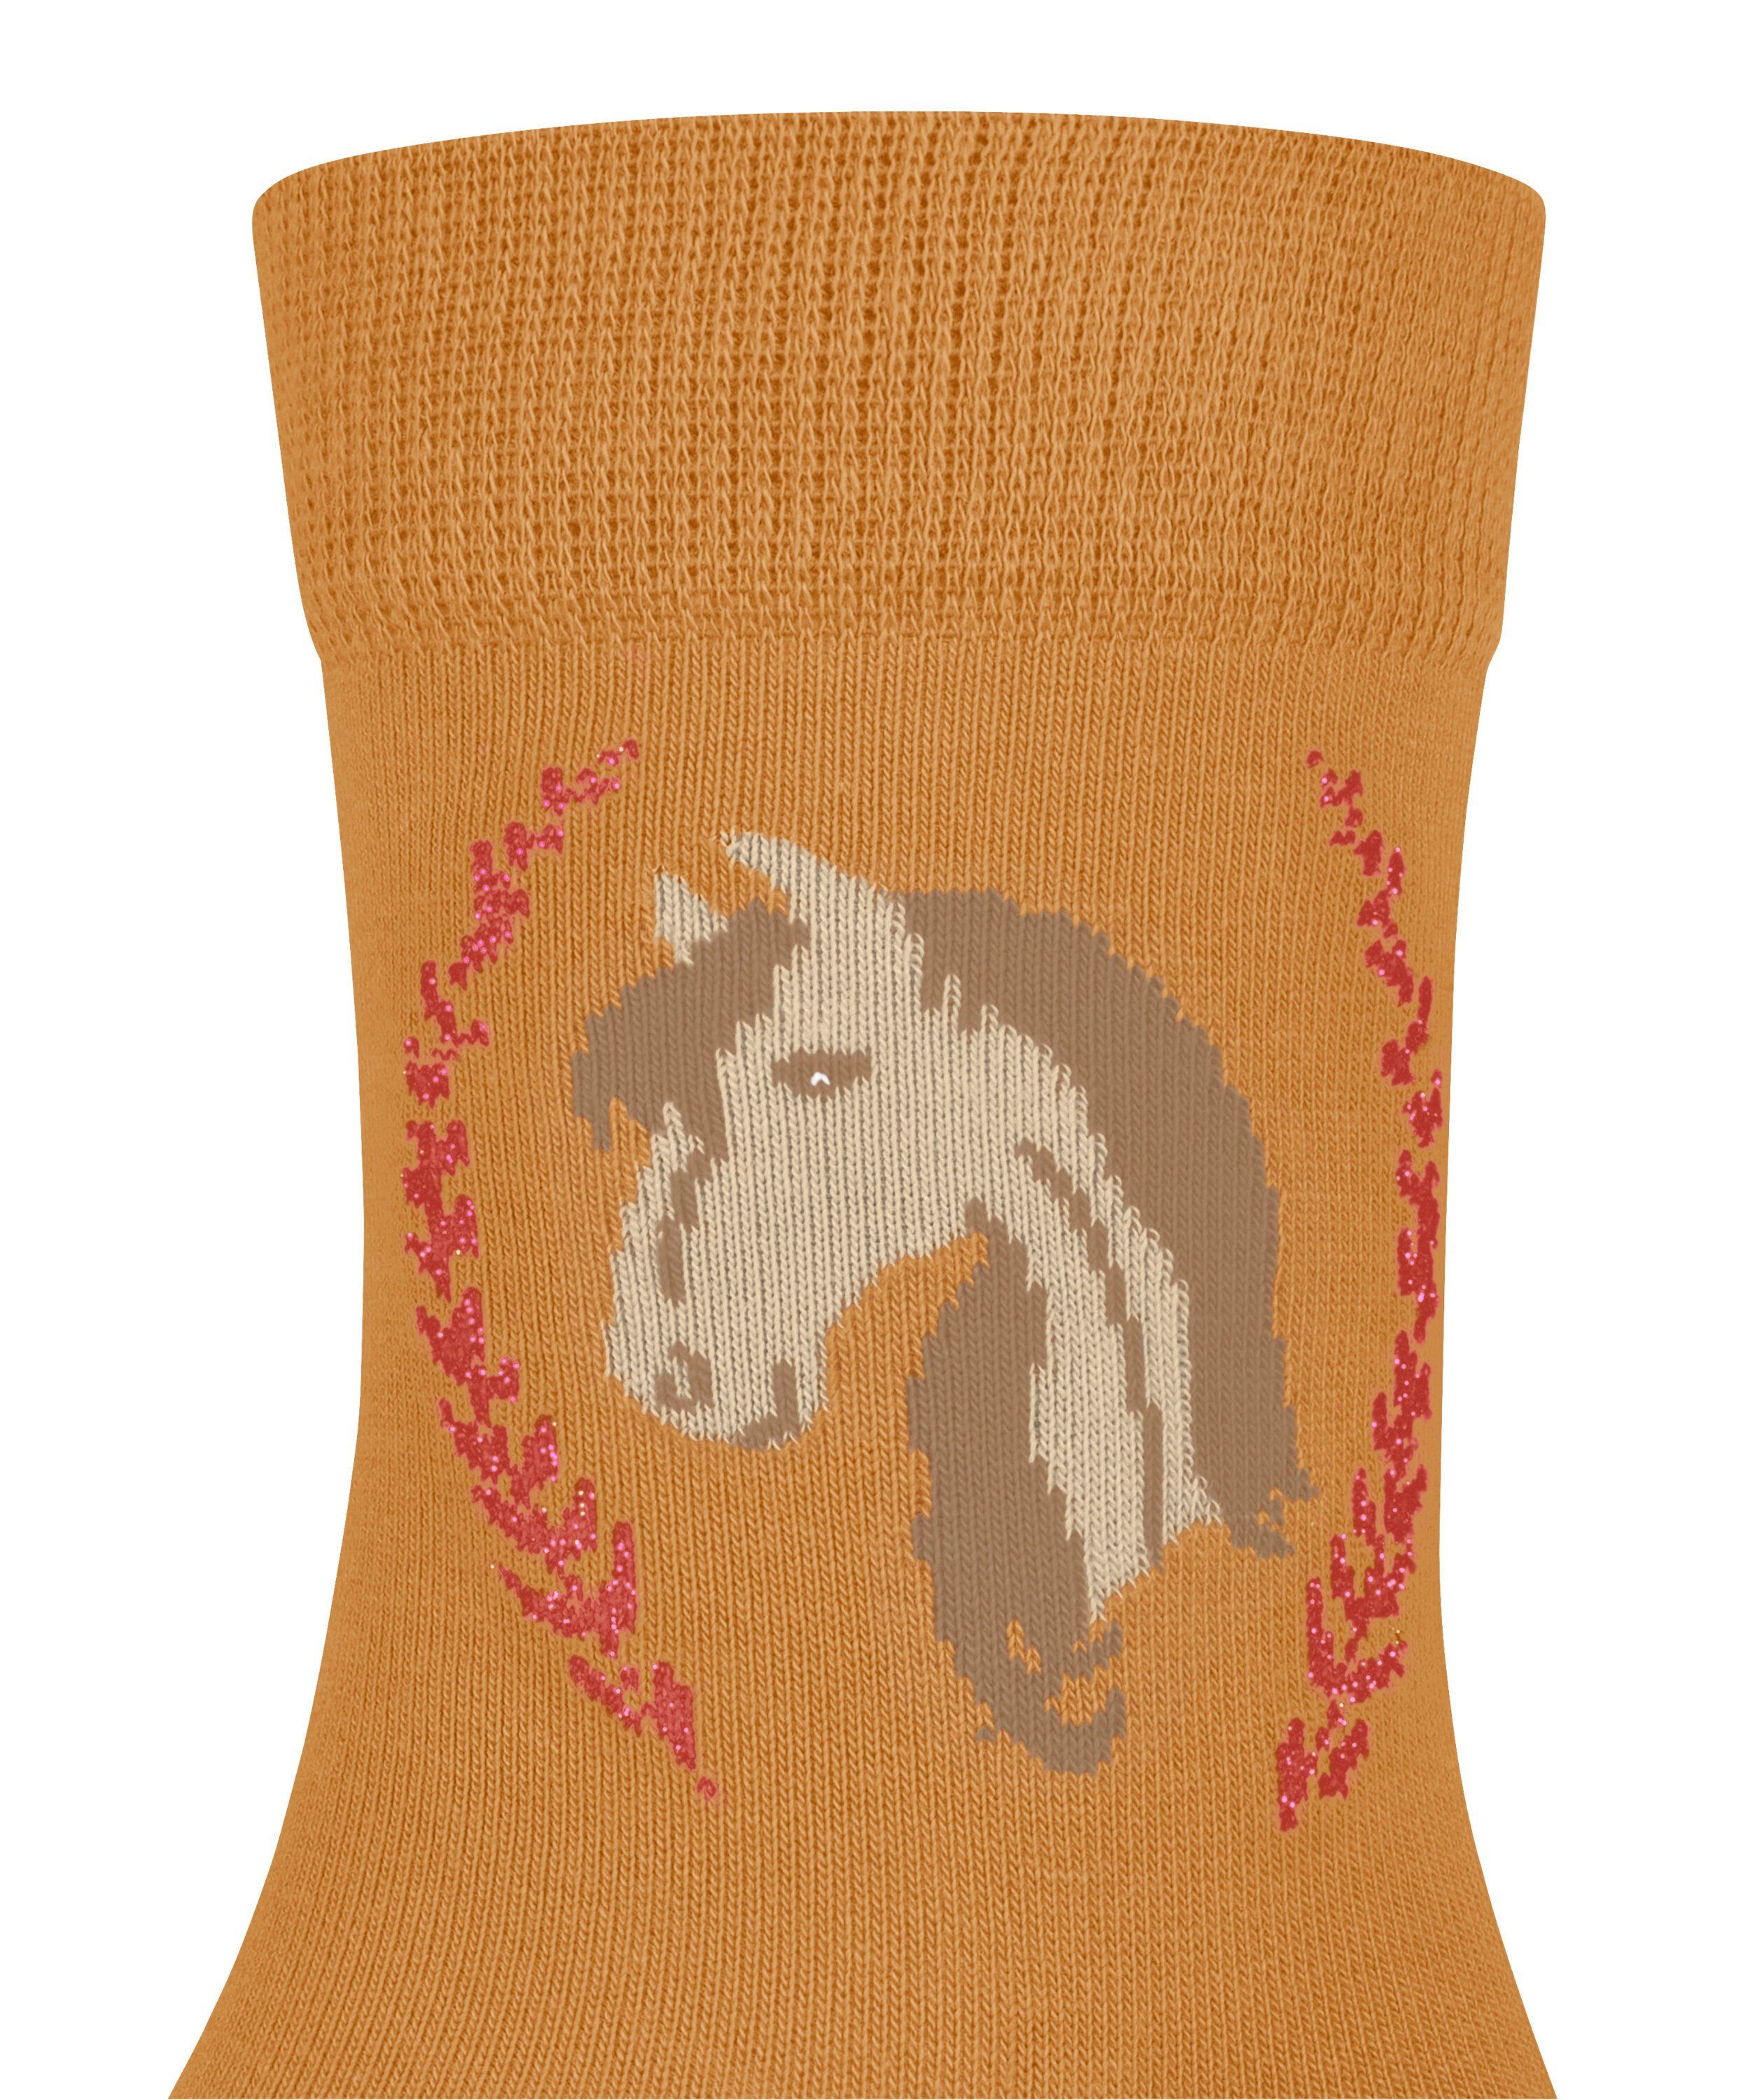 Socken mustard Horse FALKE (1350) (1-Paar)